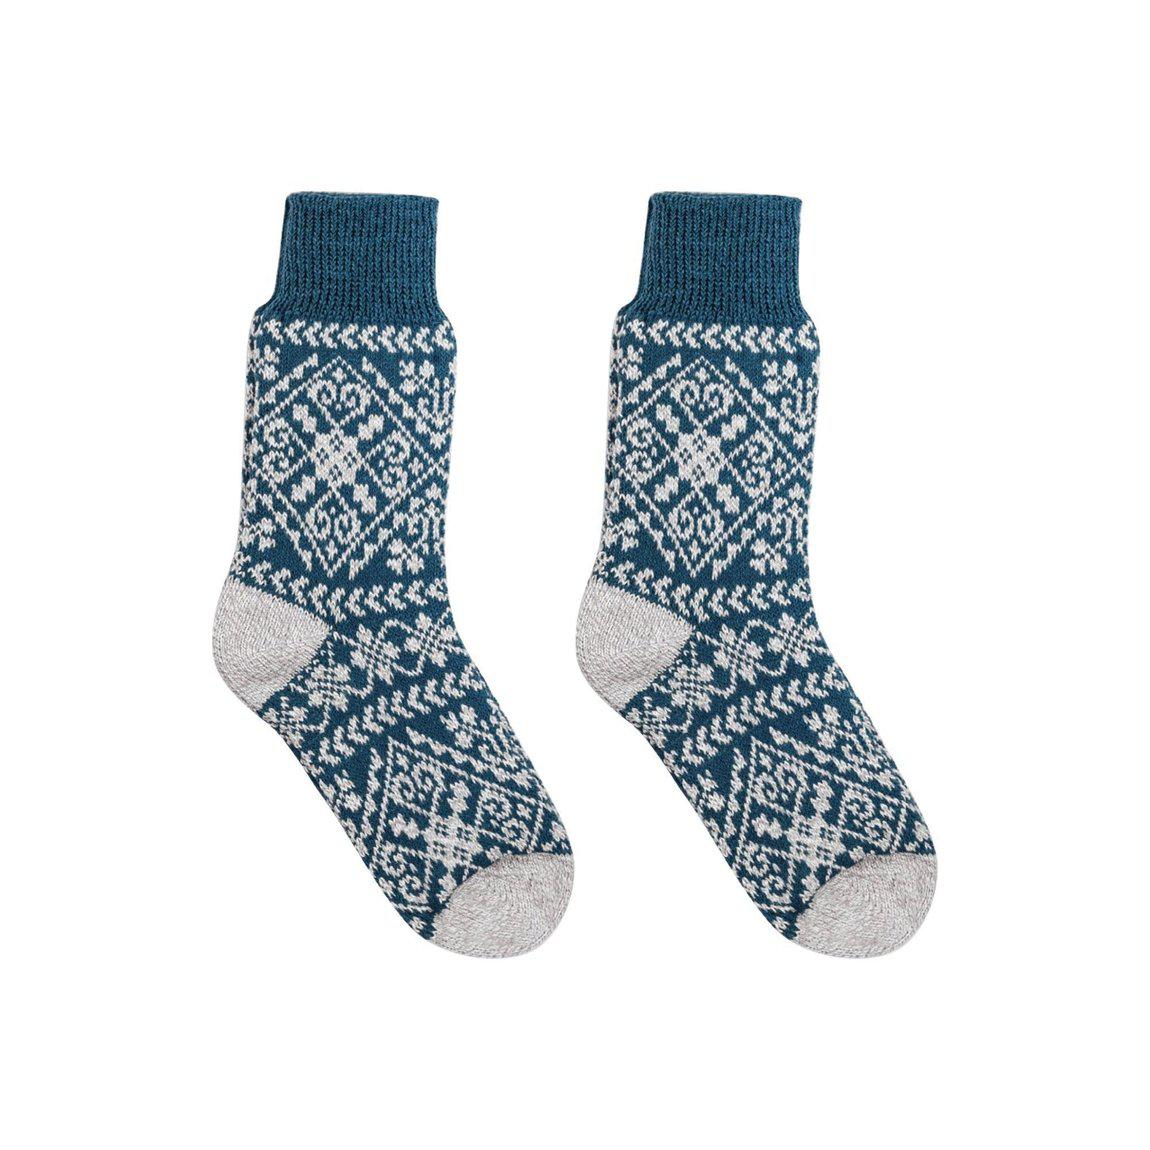 Oak and Reed Tie Dye Yoga Socks, Teal S/M, Small-Medium - Kroger